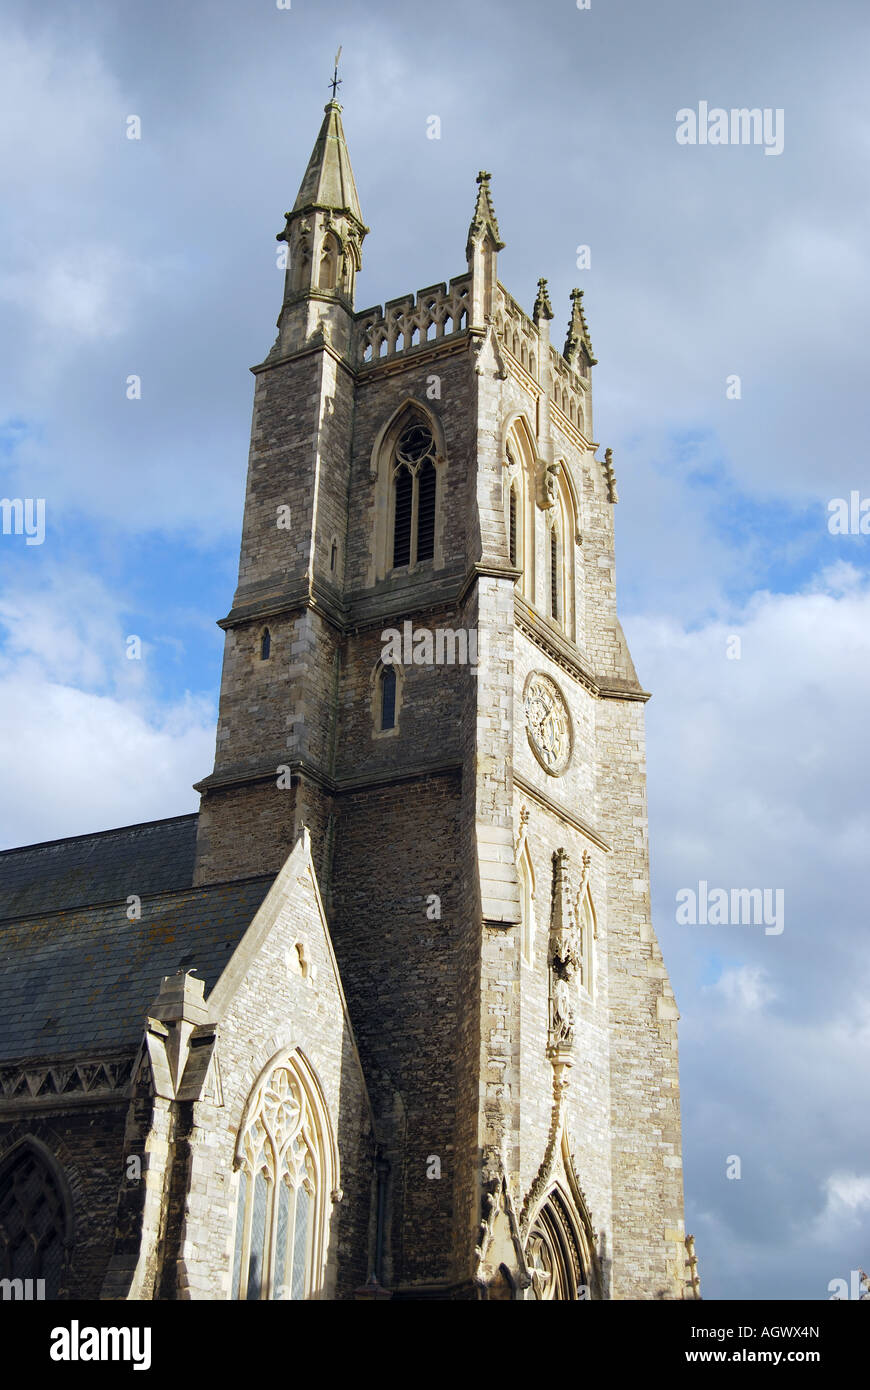 St. Thomas's Church, St. Thomas's Square, Newport, Isle of Wight, England, United Kingdom Stock Photo